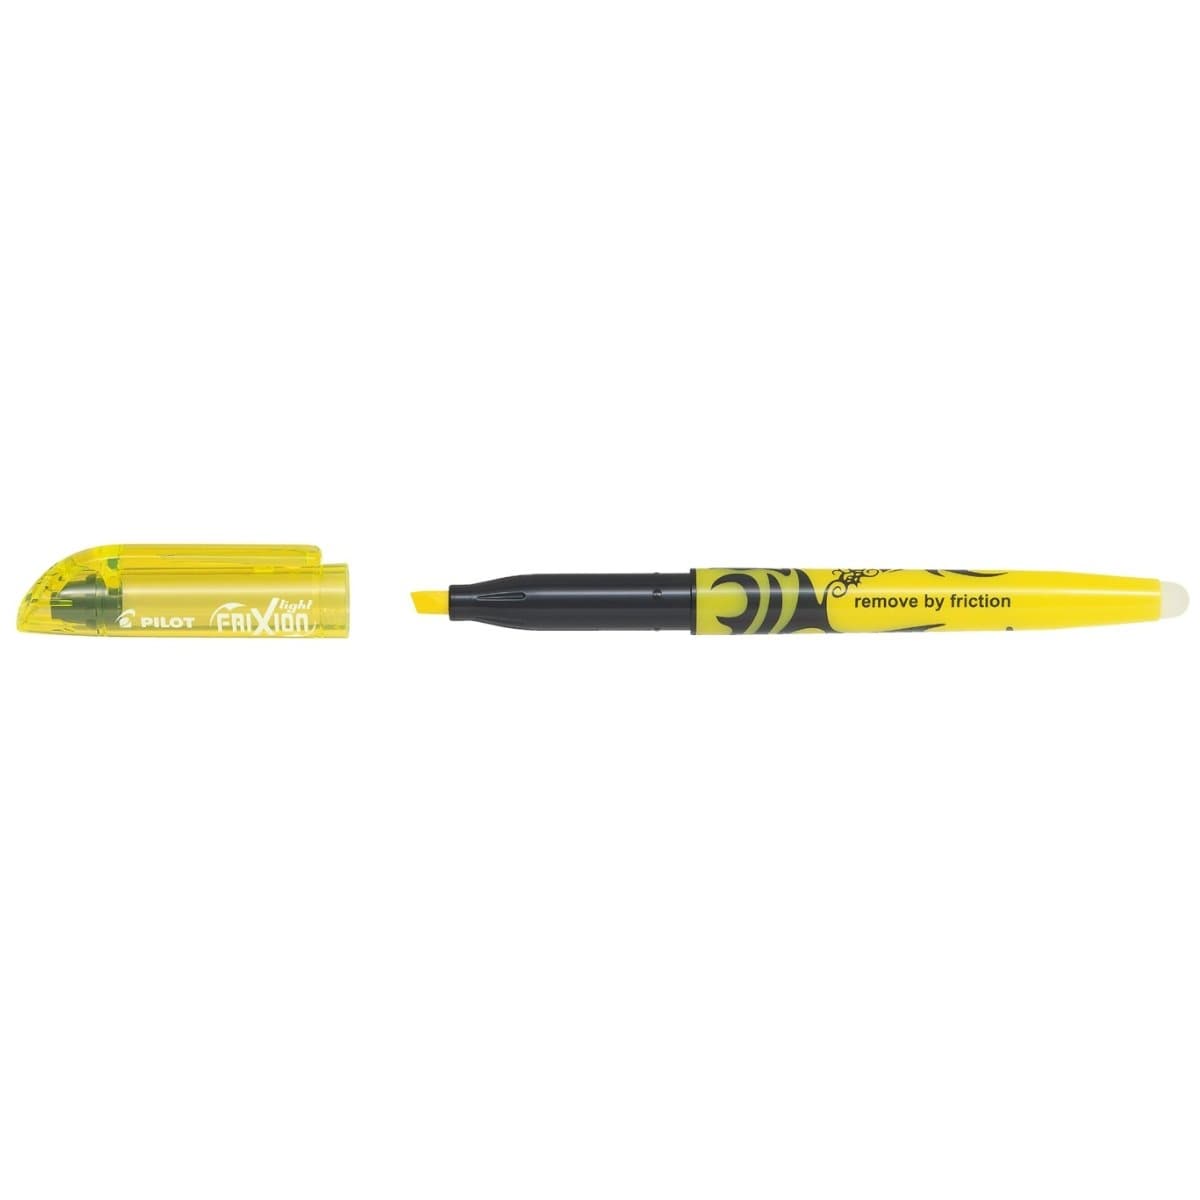 Pilot FriXion light, Erasable Highlighter Pen, Yellow